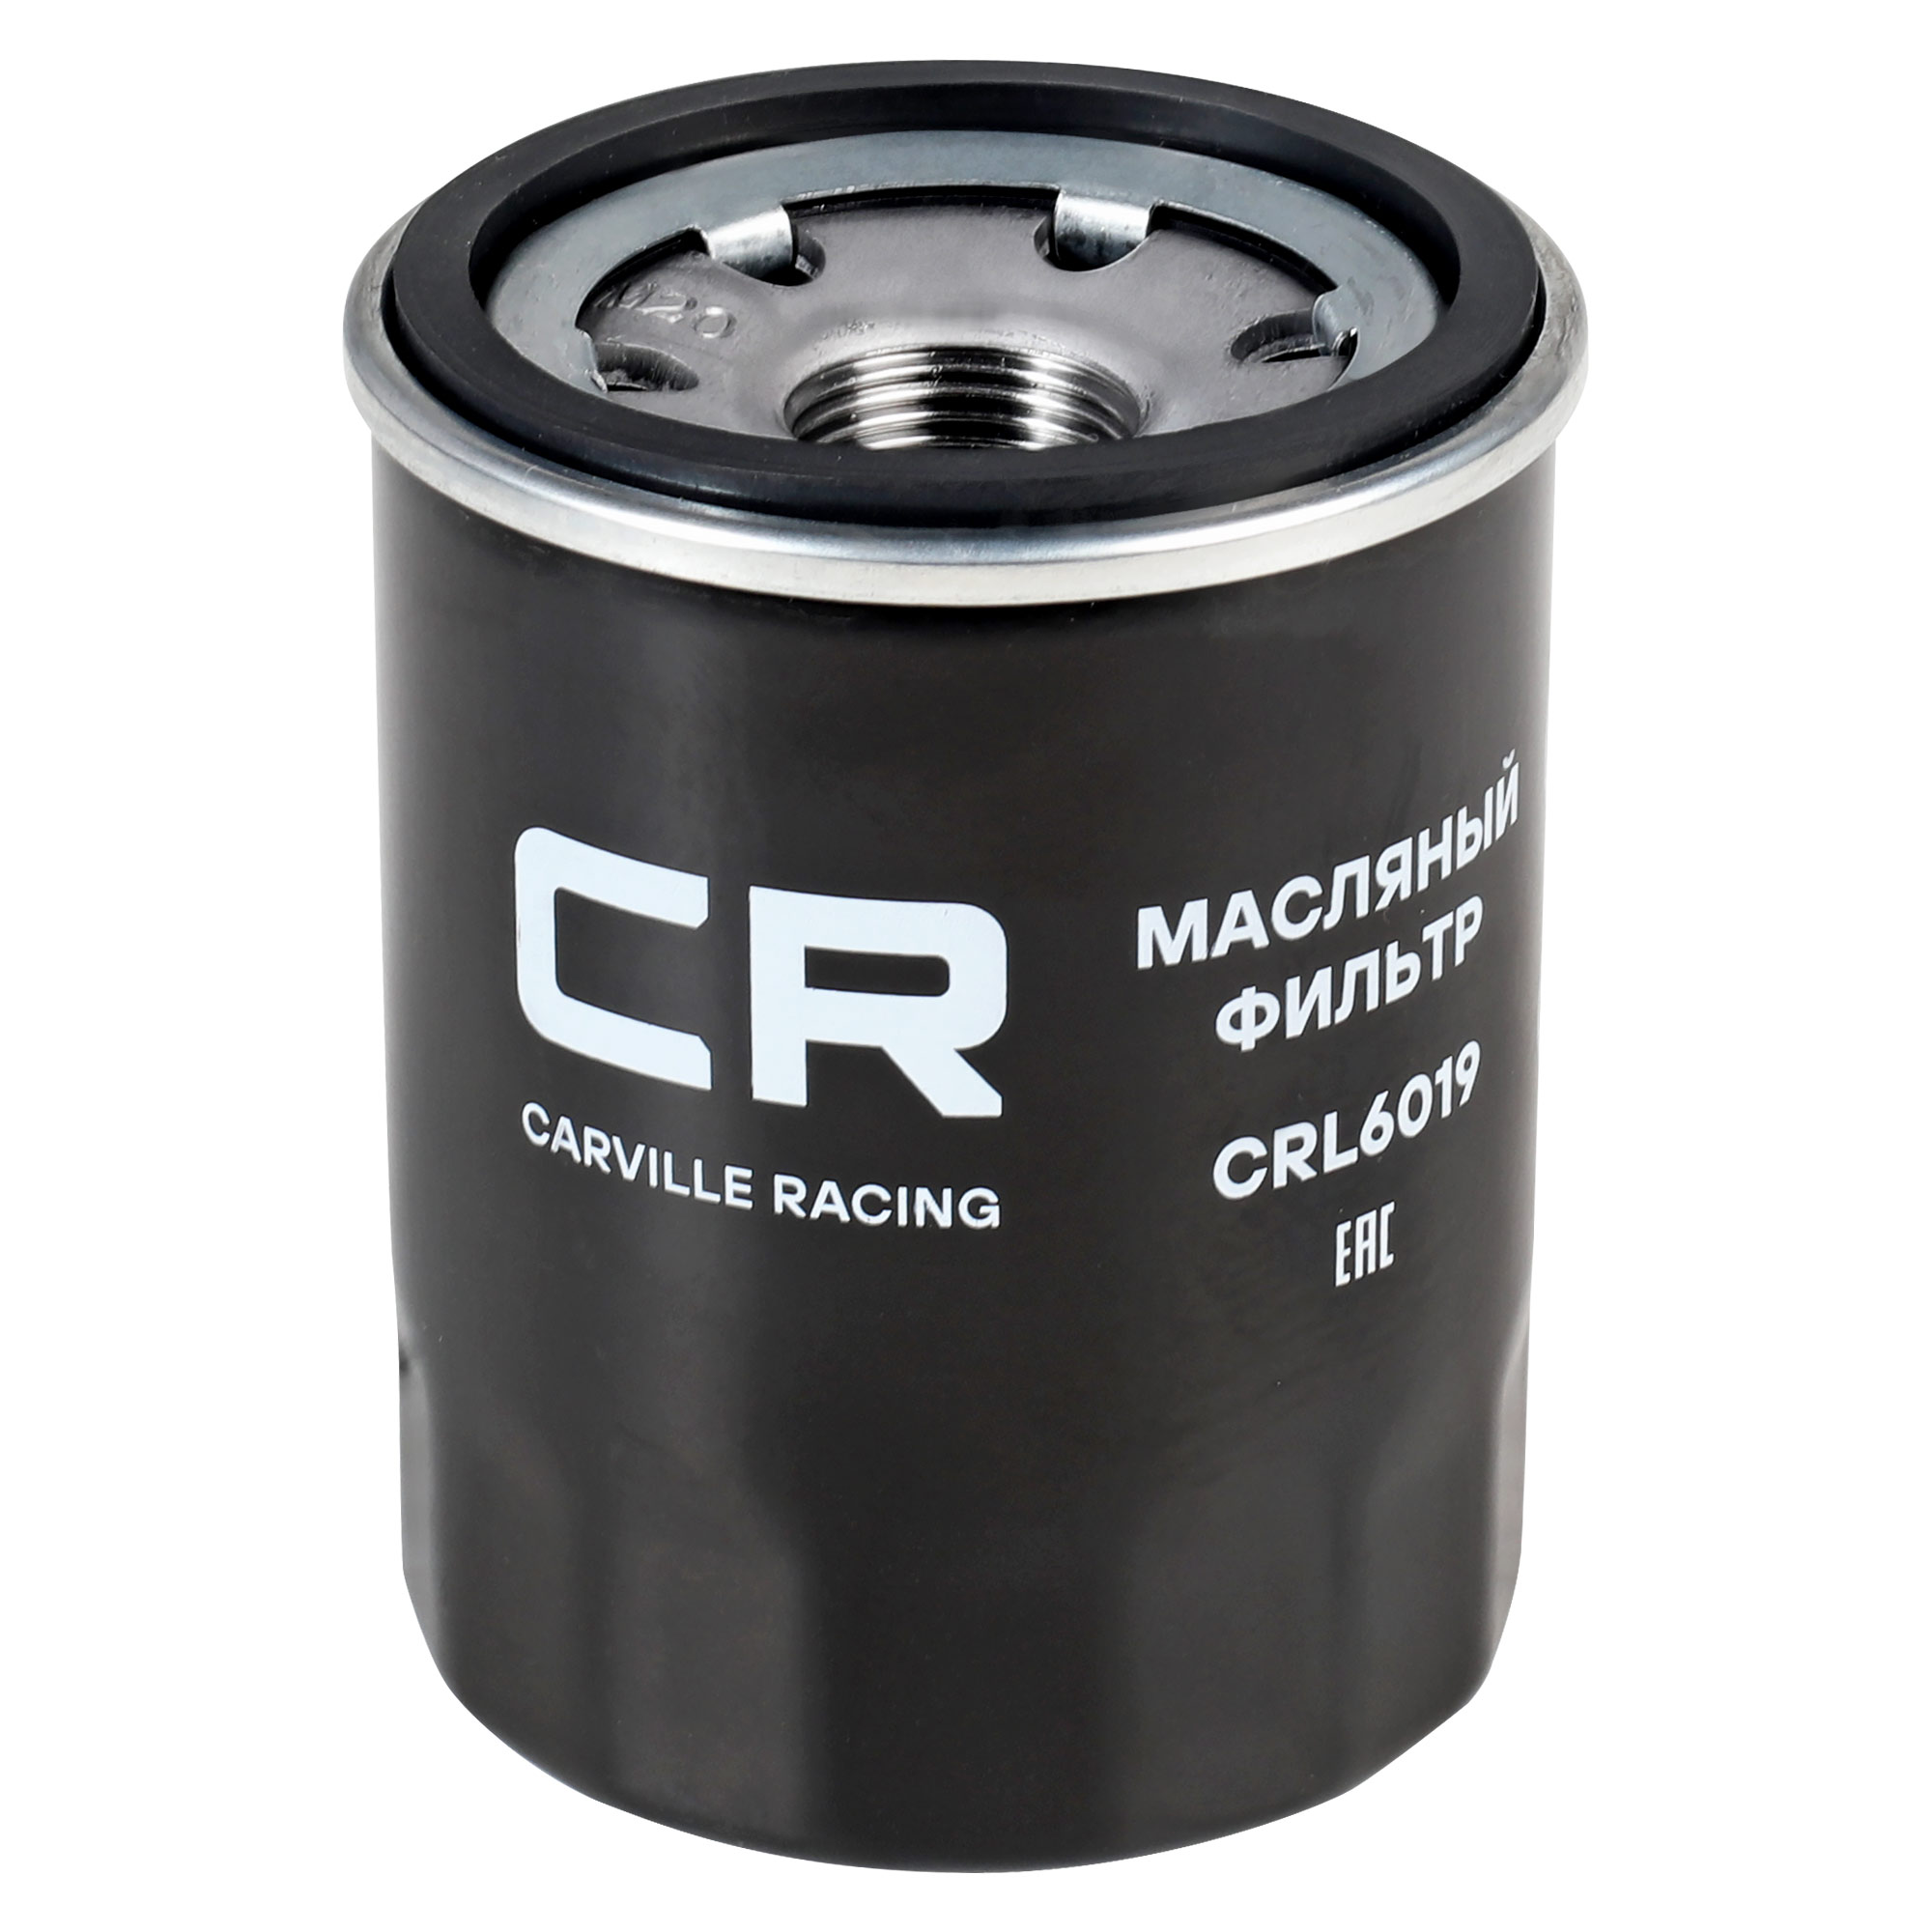 CARVILLE RACING CRL6019 Фильтр для а/м subaru forester (08 ) 2.0/2.5i/outback (09 ) 2.5i/xv (12 ) (масл.) (crl6019) купить в Самаре